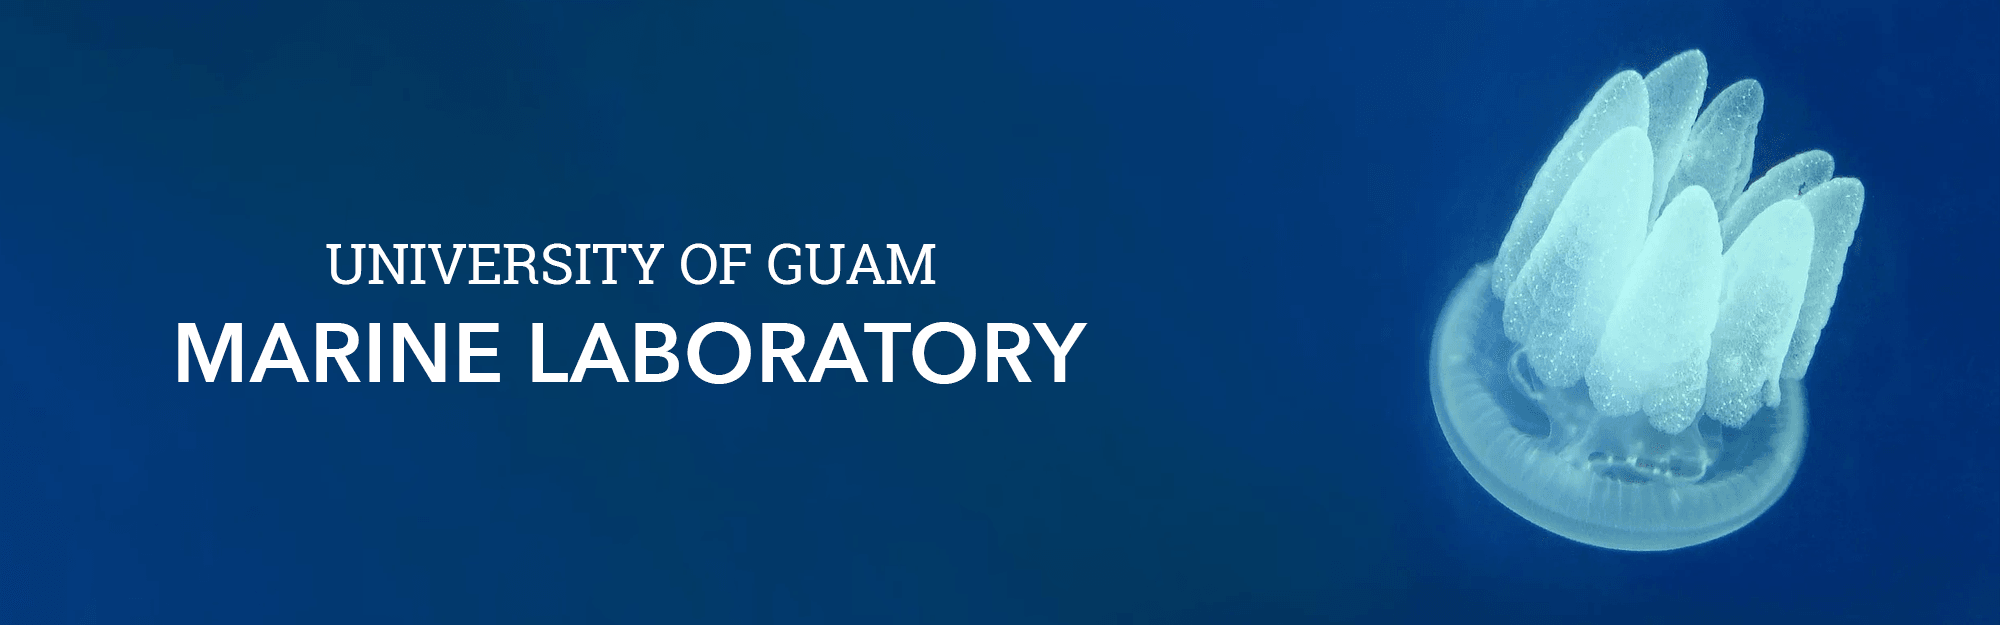 University of Guam Marine Laboratory